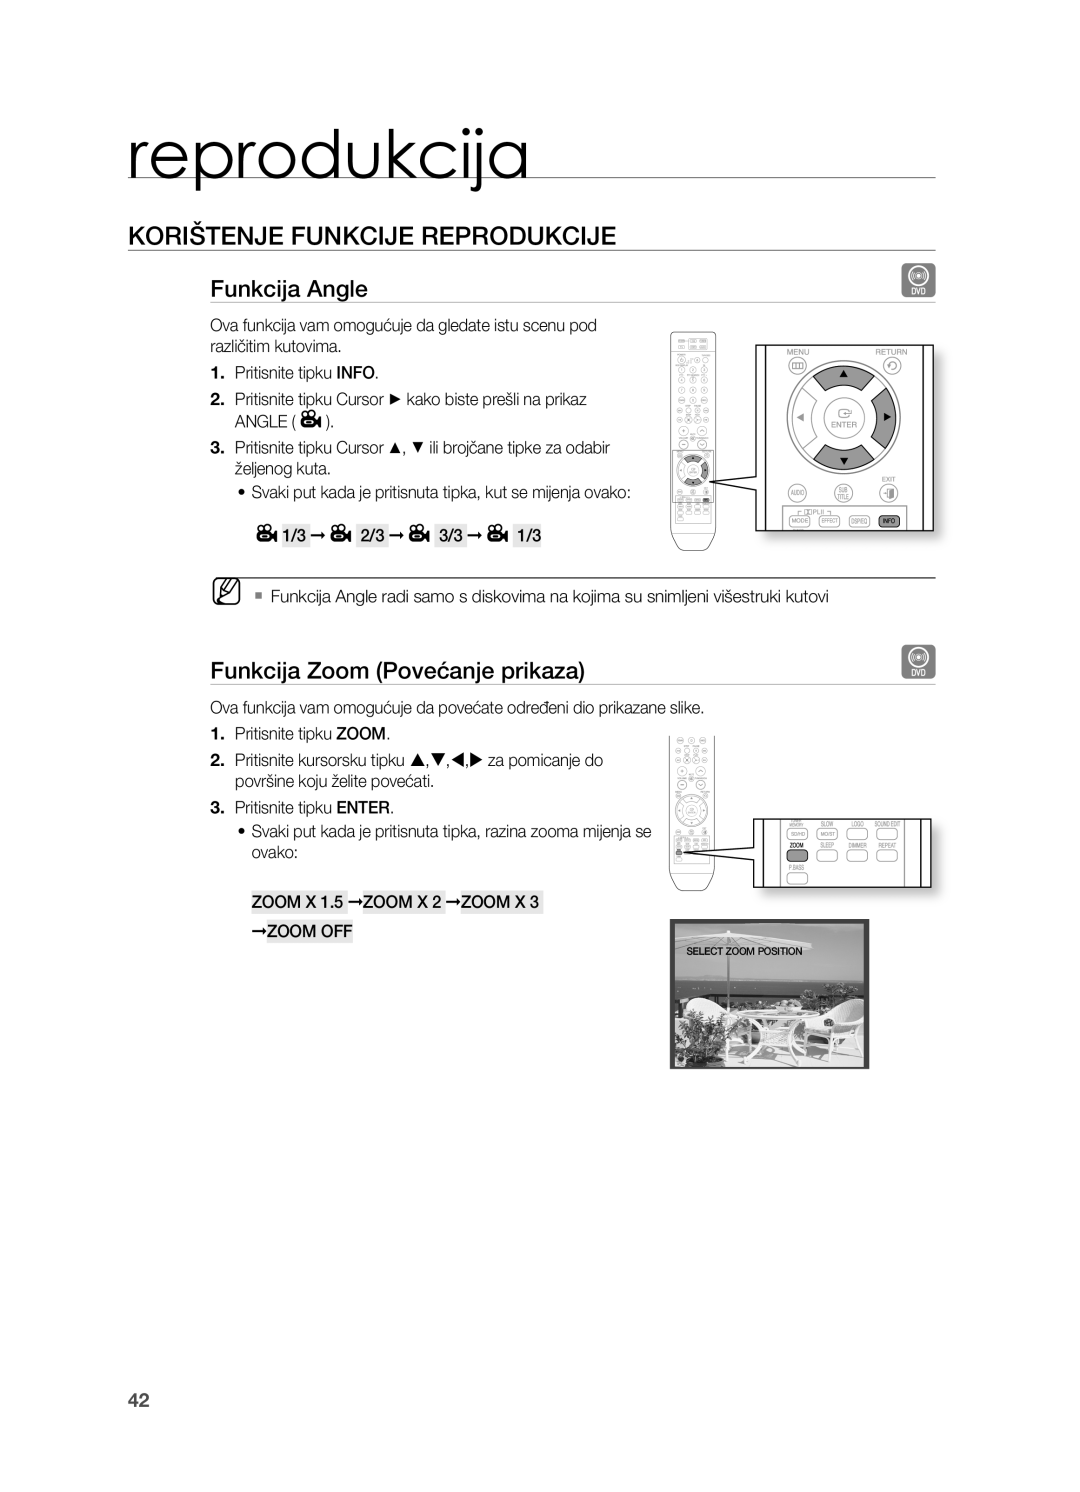 Samsung HT-TZ315R/EDC Funkcija Angle, Funkcija Zoom Povećanje prikaza, reprodukcija, koRIŠTENjE FUNkCIjE REPRoDUkCIjE 